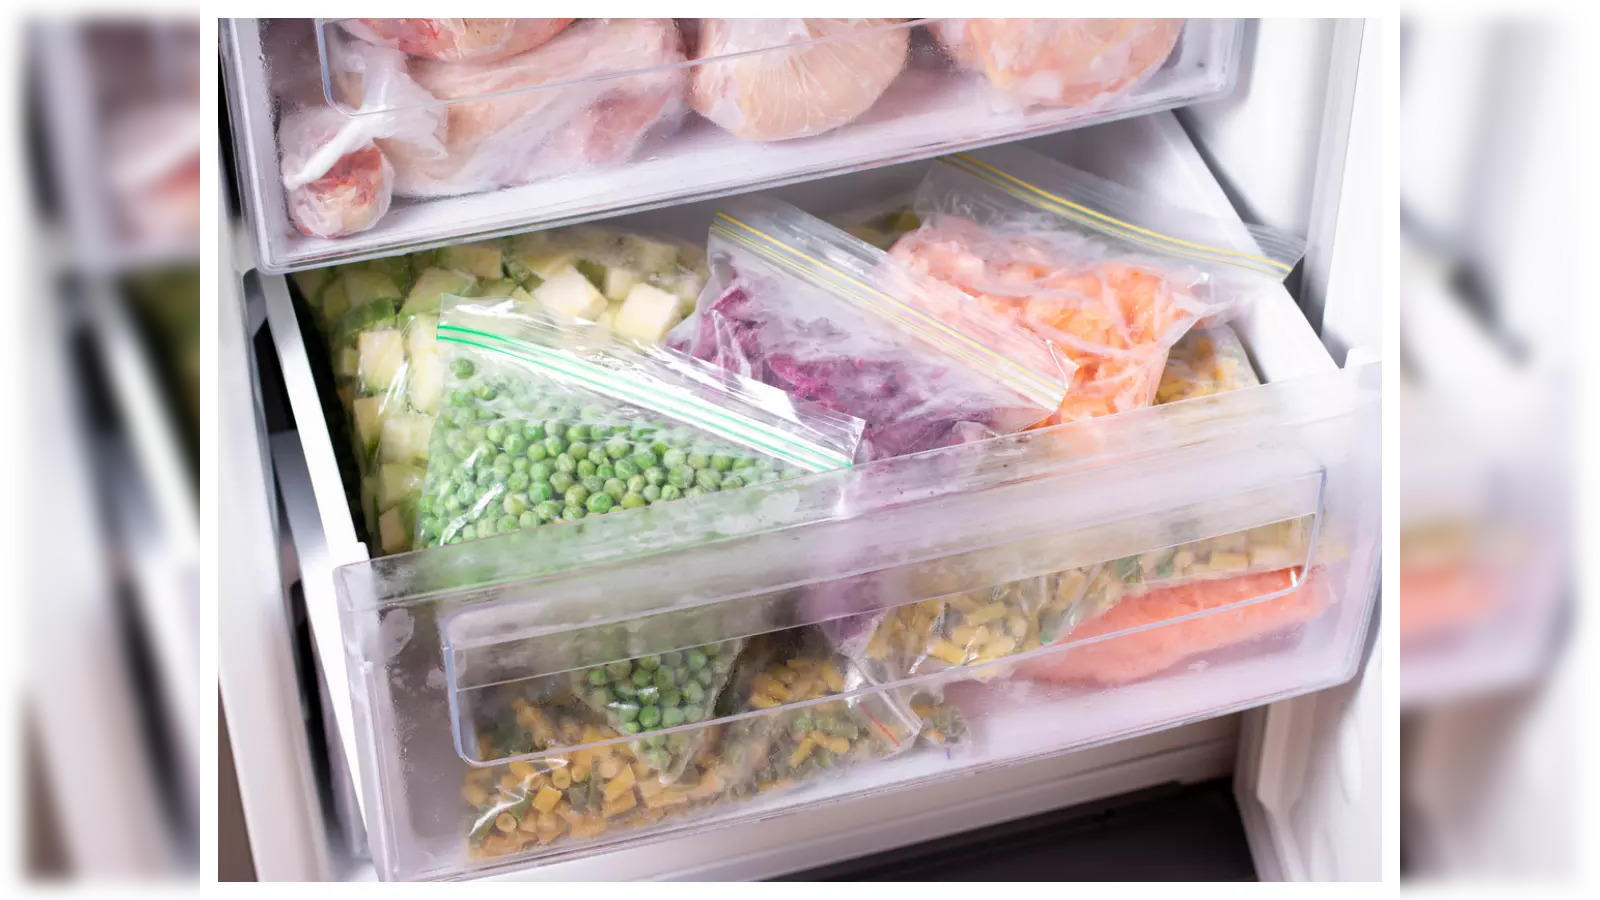 Buy NIPAN Fridge Storage Container, Vegetable Storage Box with